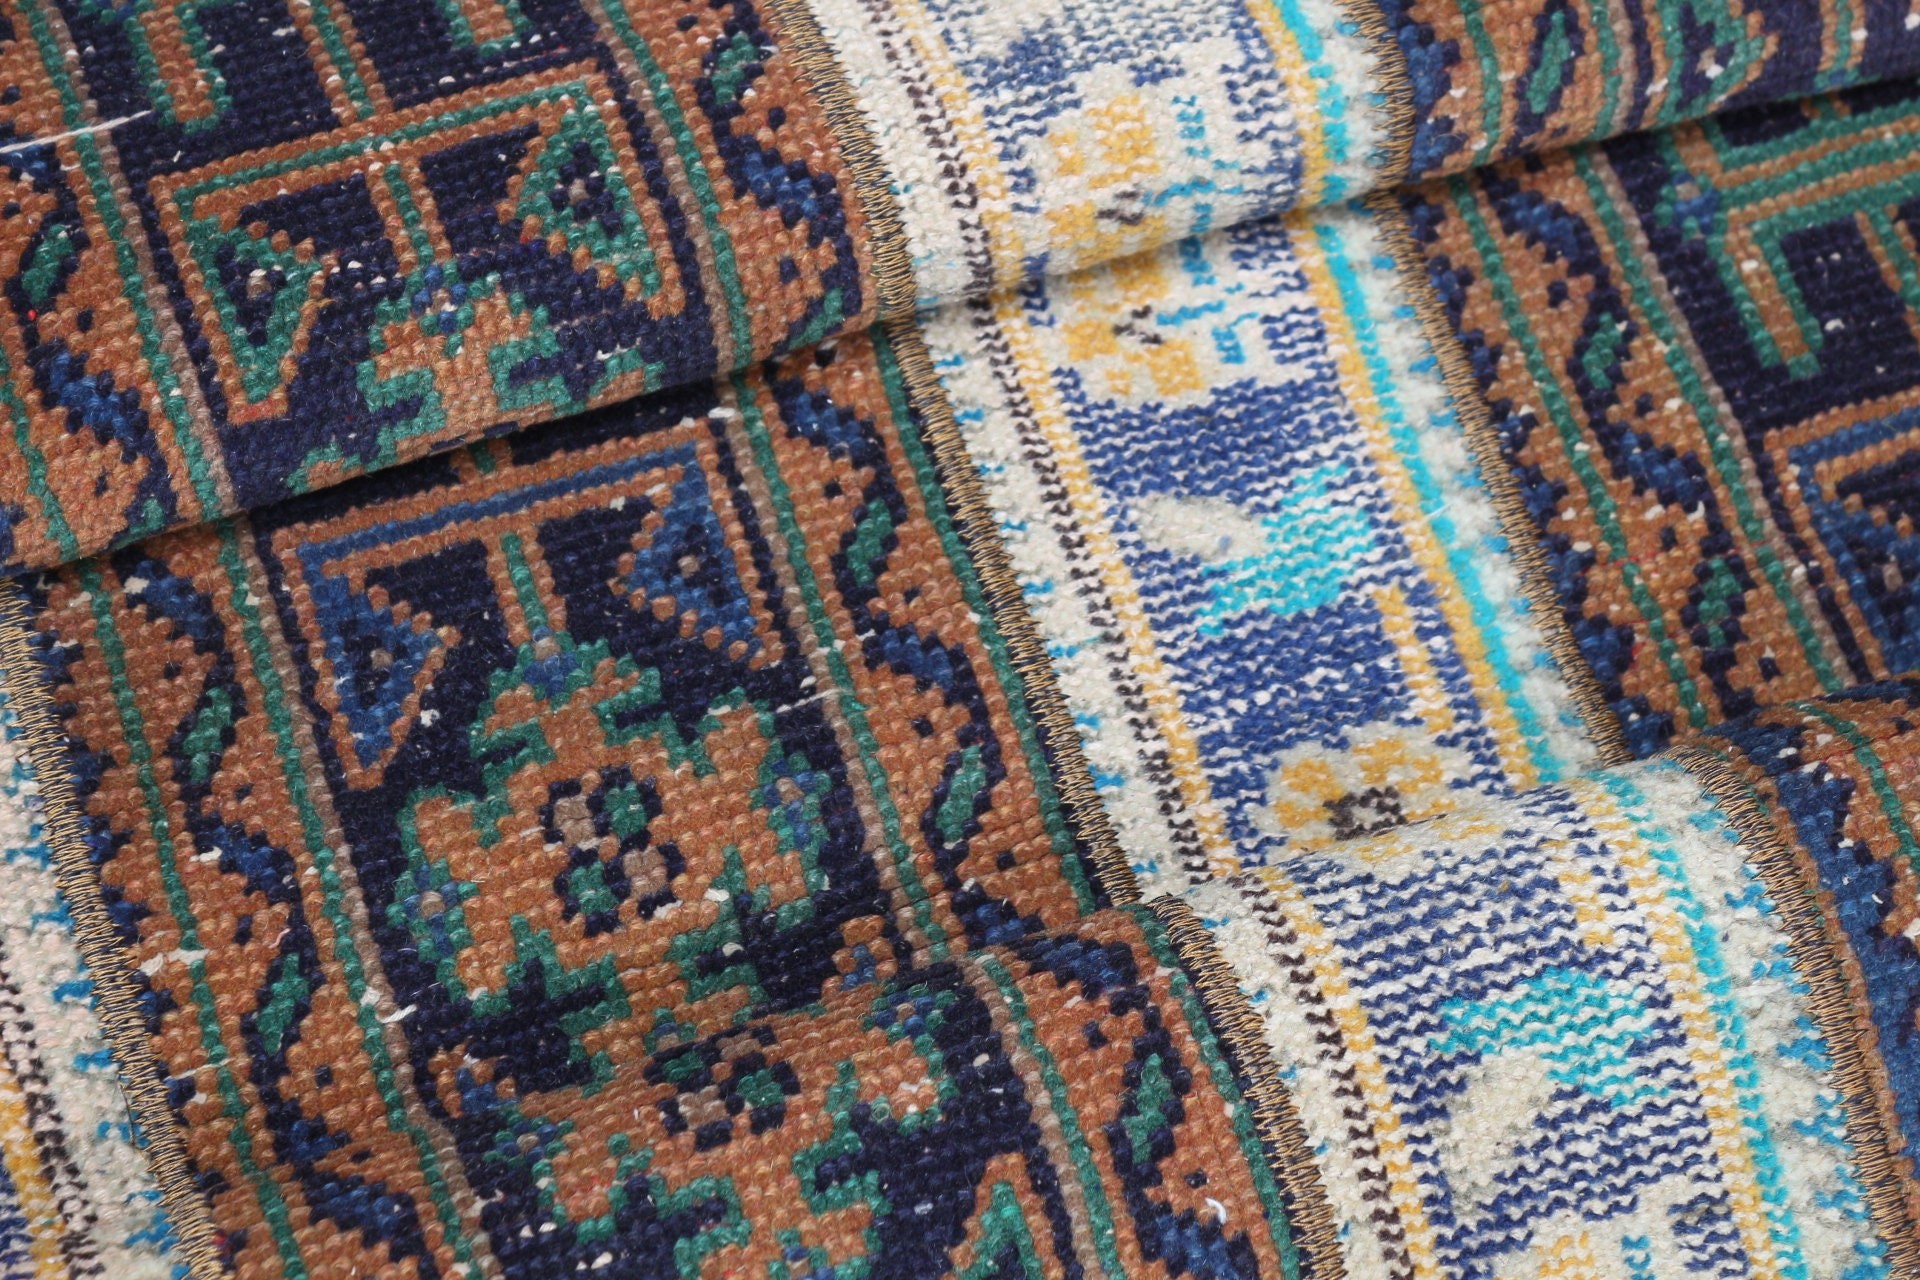 Turkish Rugs, Door Mat Rug, Moroccan Rug, Kitchen Rug, Blue Wool Rug, Cool Rug, Rugs for Car Mat, Vintage Rug, 2.5x4.6 ft Small Rug